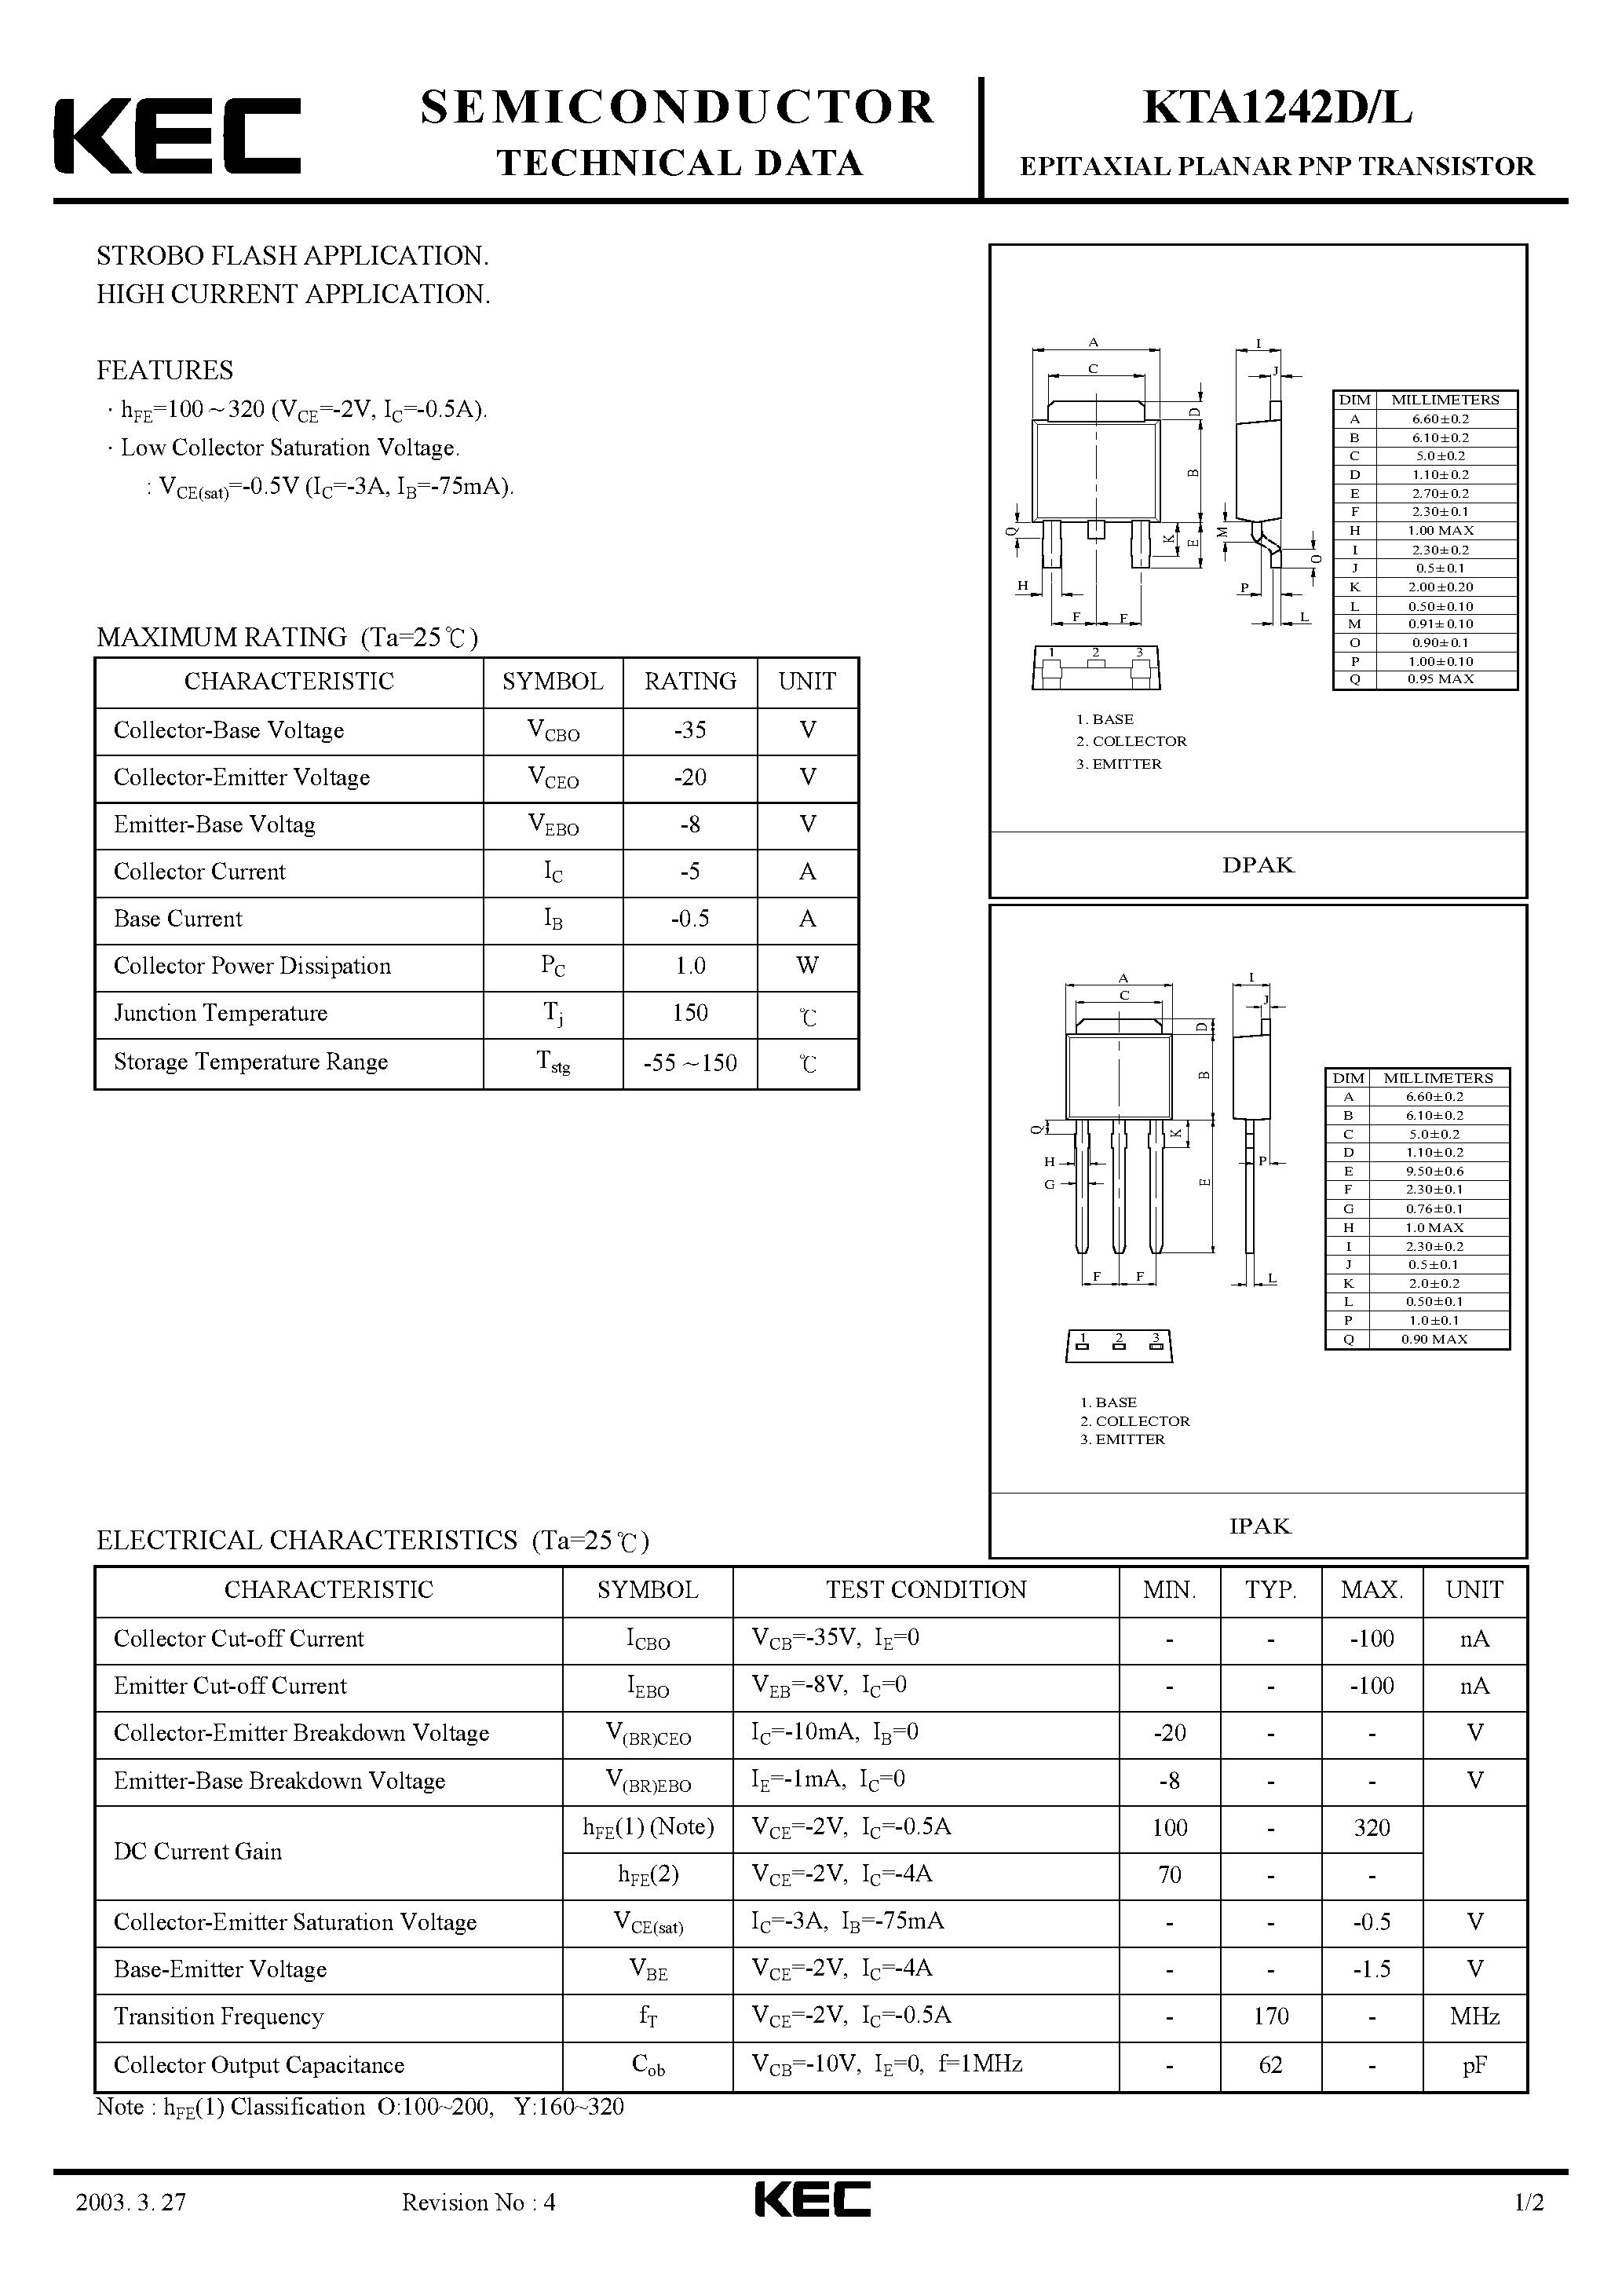 Datasheet KTA1242 - EPITAXIAL PLANAR PNP TRANSISTOR (STROBO FLASH/ HIGH CURRENT) page 1